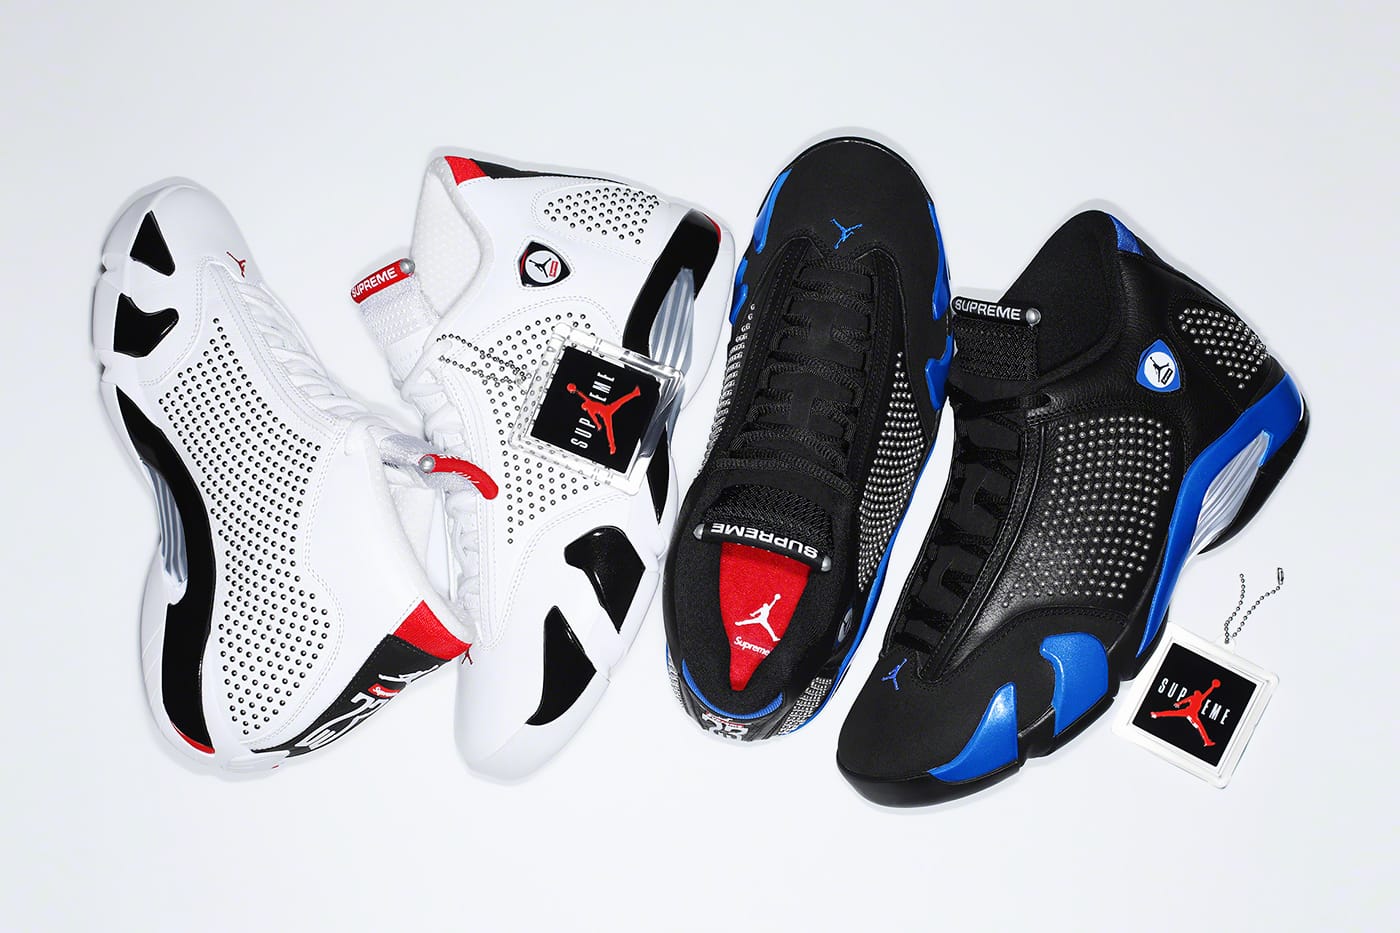 Supreme®/Nike Air Jordan XIV